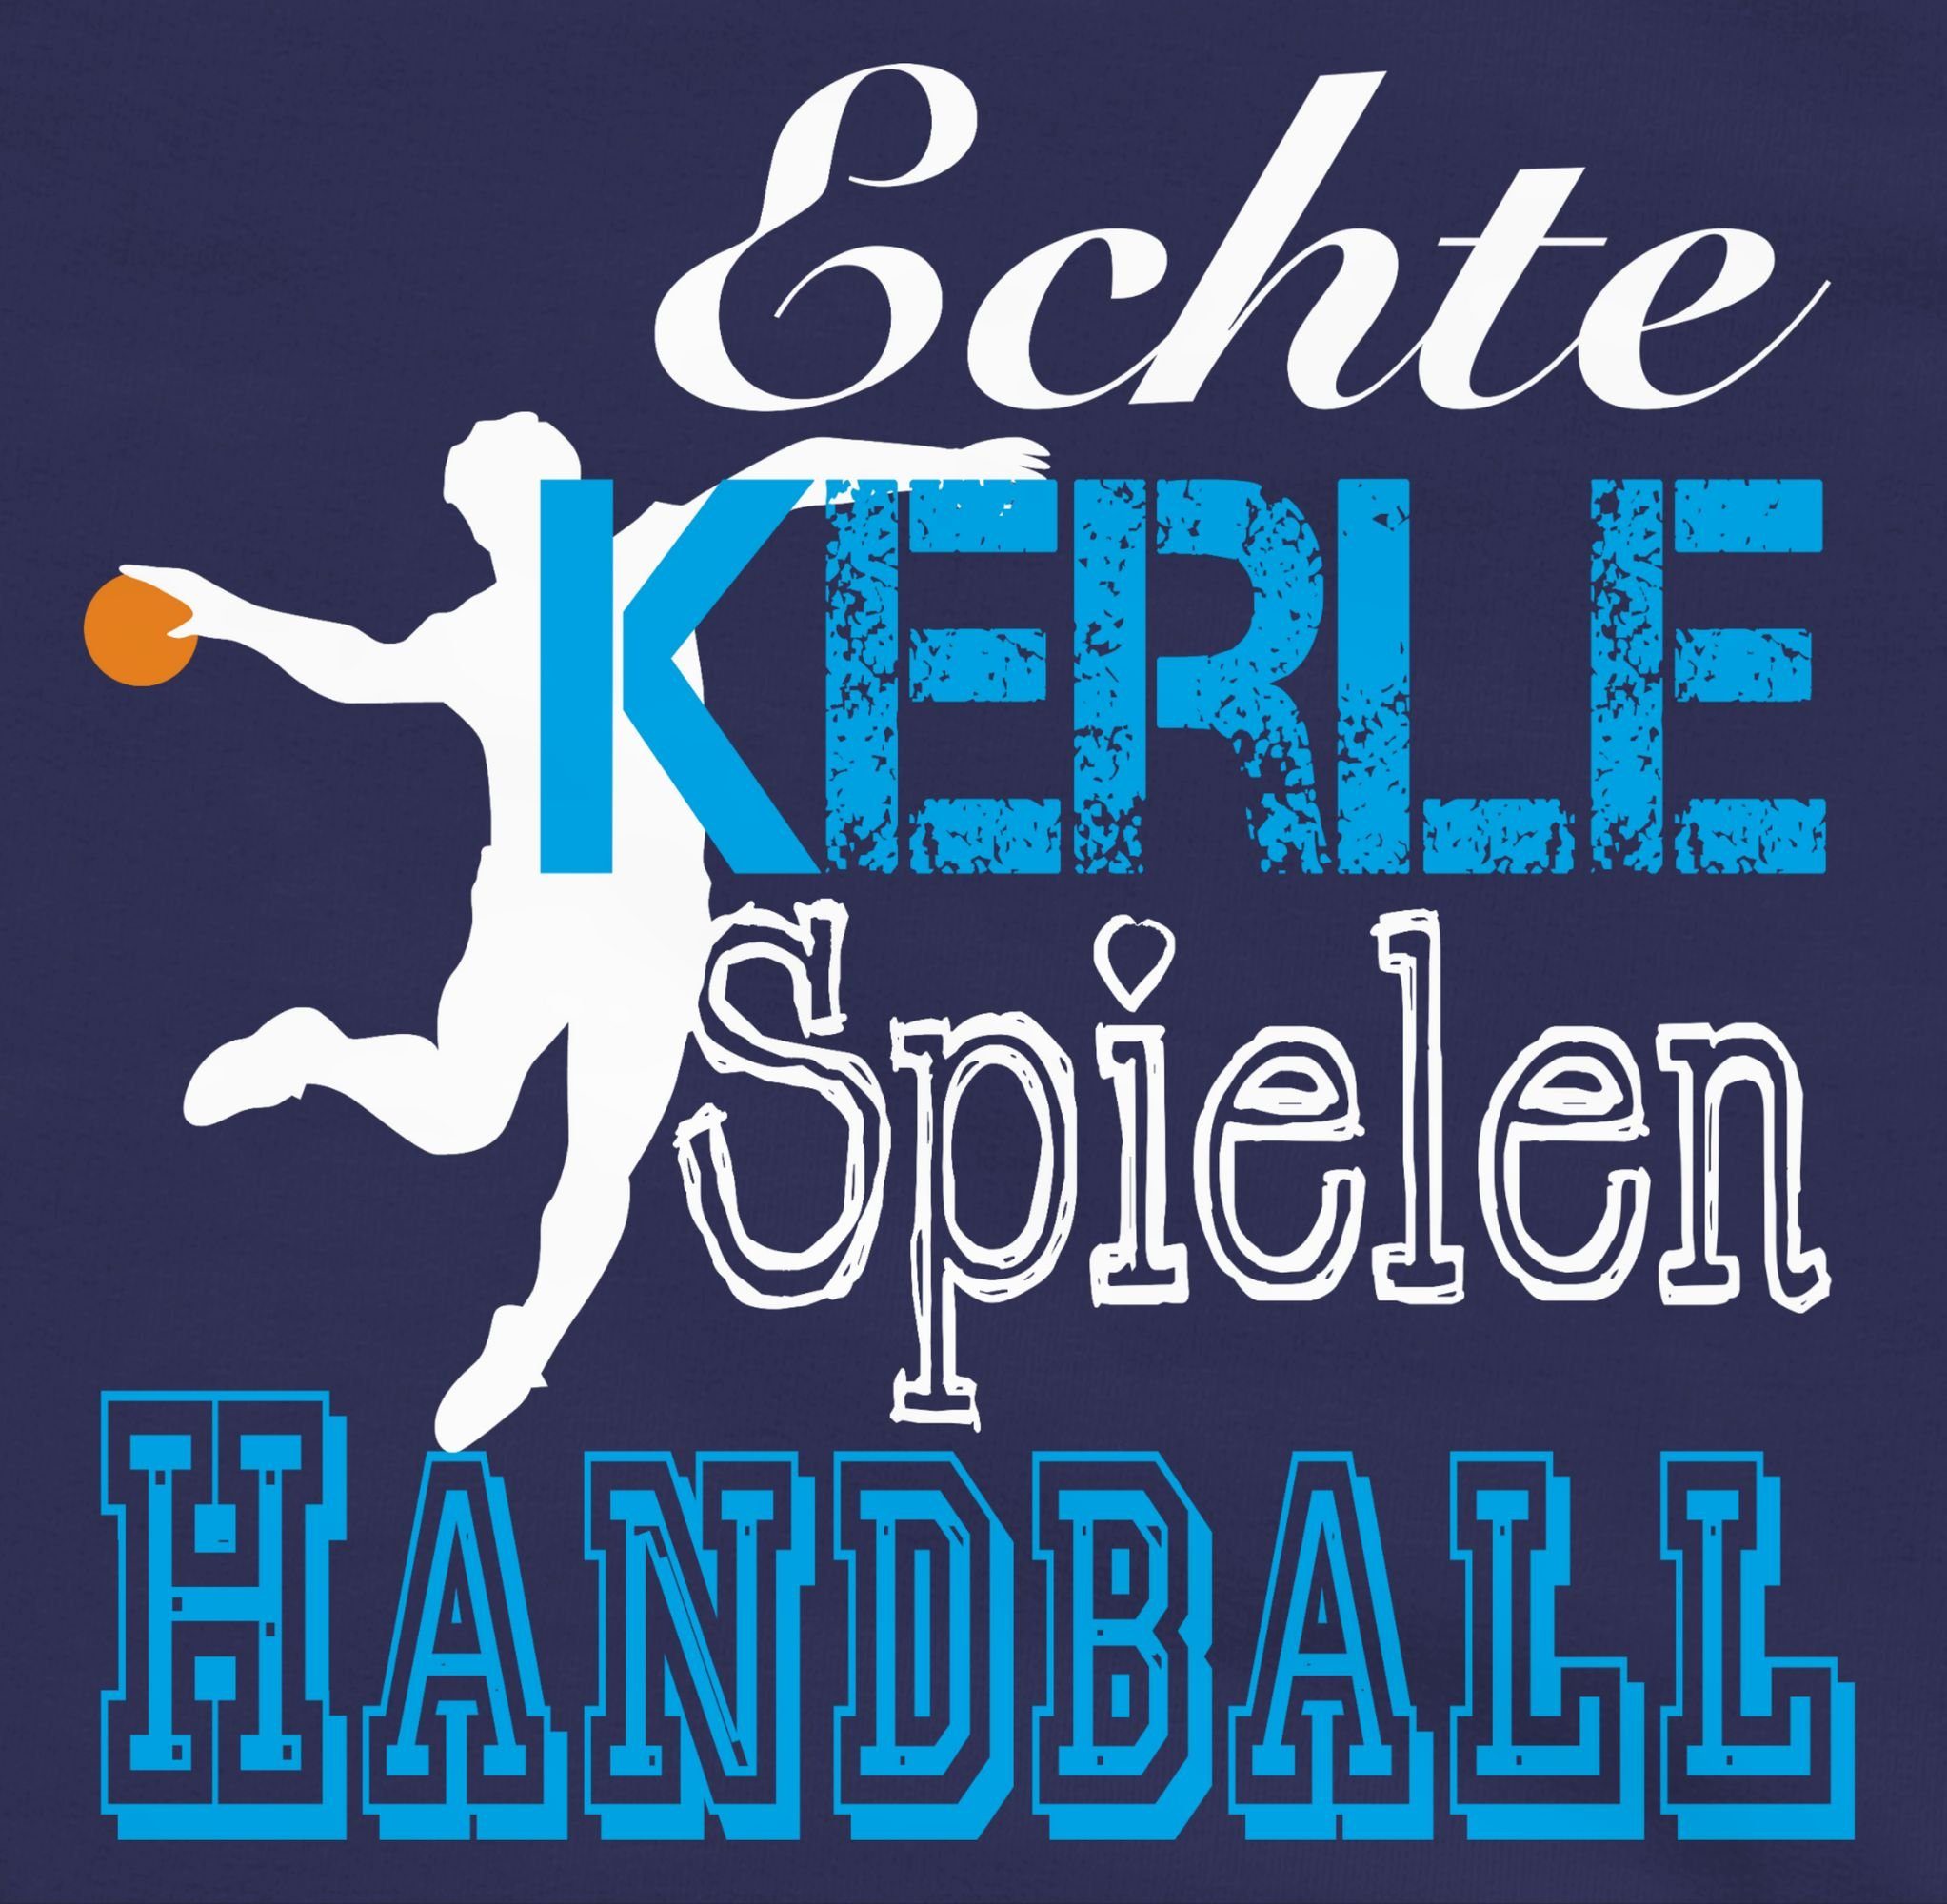 Shirtracer Hoodie Echte Kleidung Kerle Navy Blau/Grau 1 Kinder weiß Handball meliert Sport Spielen